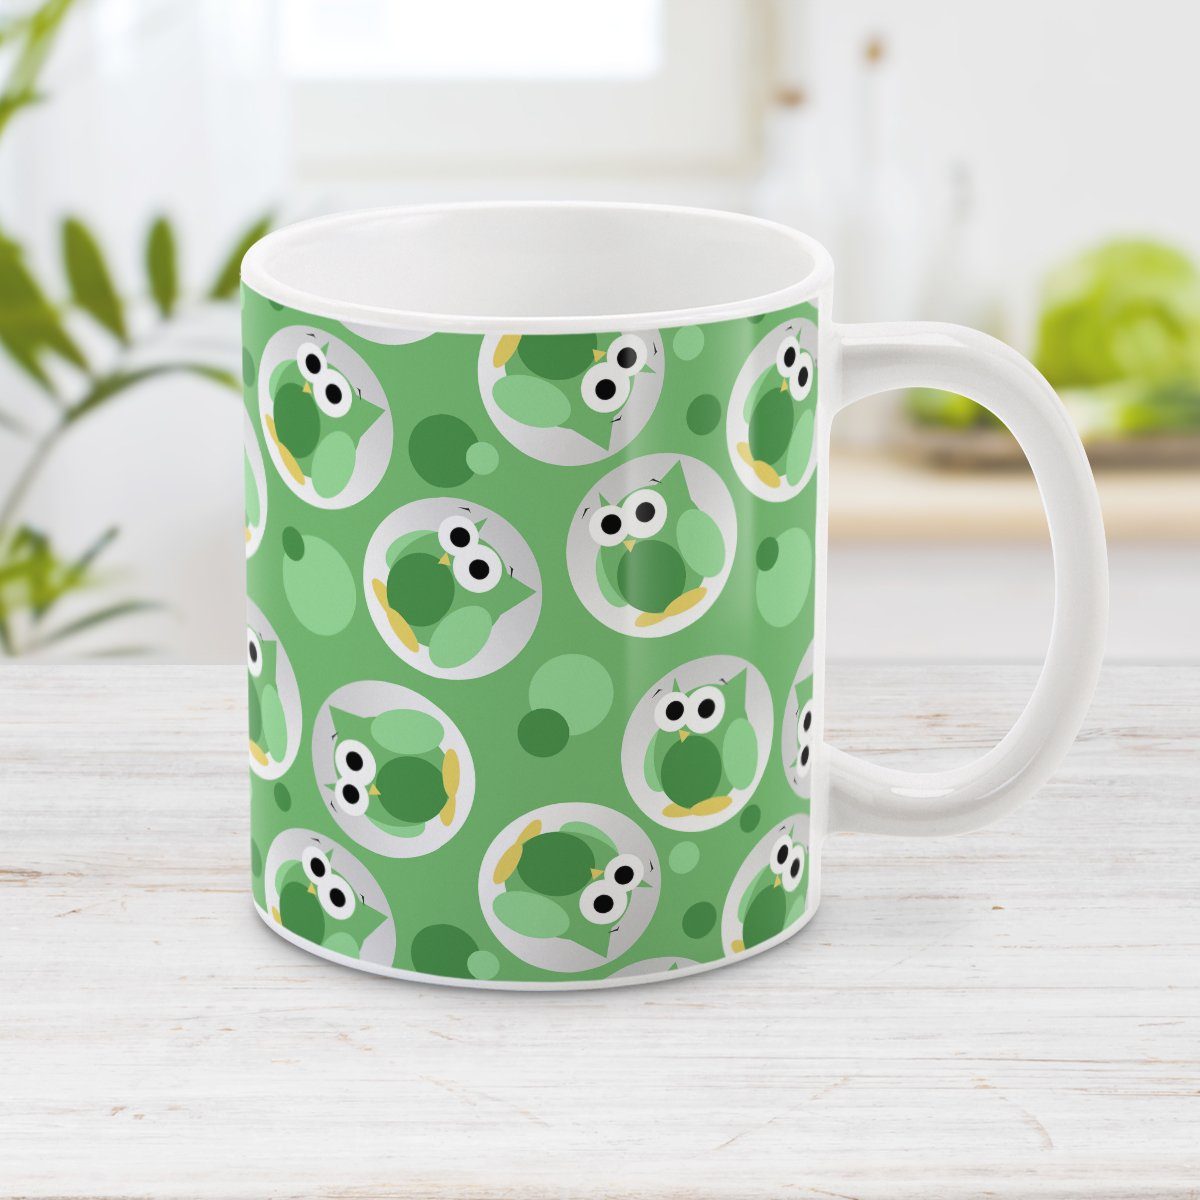 Green Owl Mug - Funny Cute Green Owl Pattern Mug at Amy's Coffee Mugs